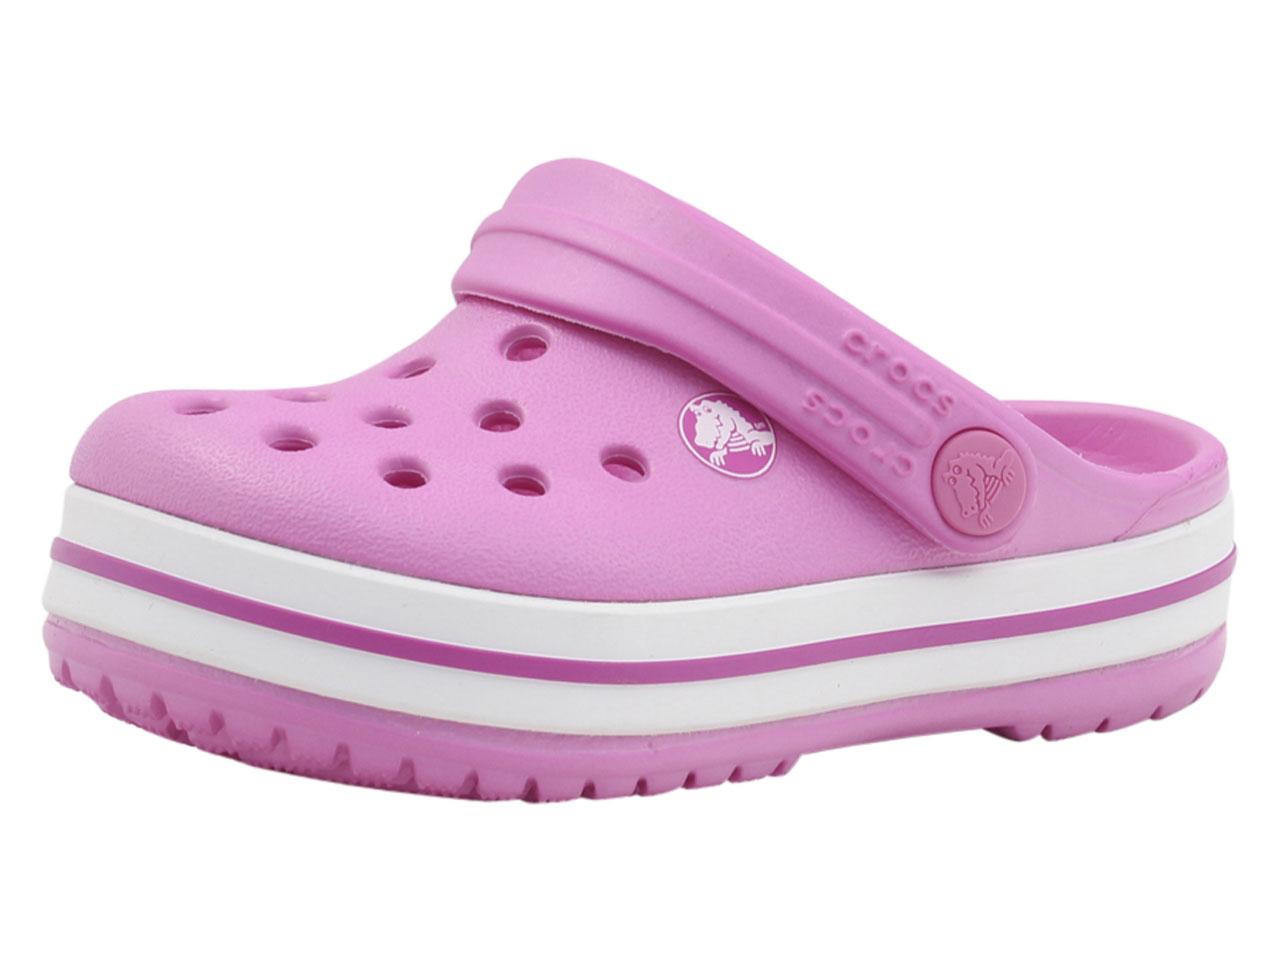 Crocs Toddler/Little Kid's Crocband Clogs Sandals Shoes - Party Pink - 11 M US Little Kid